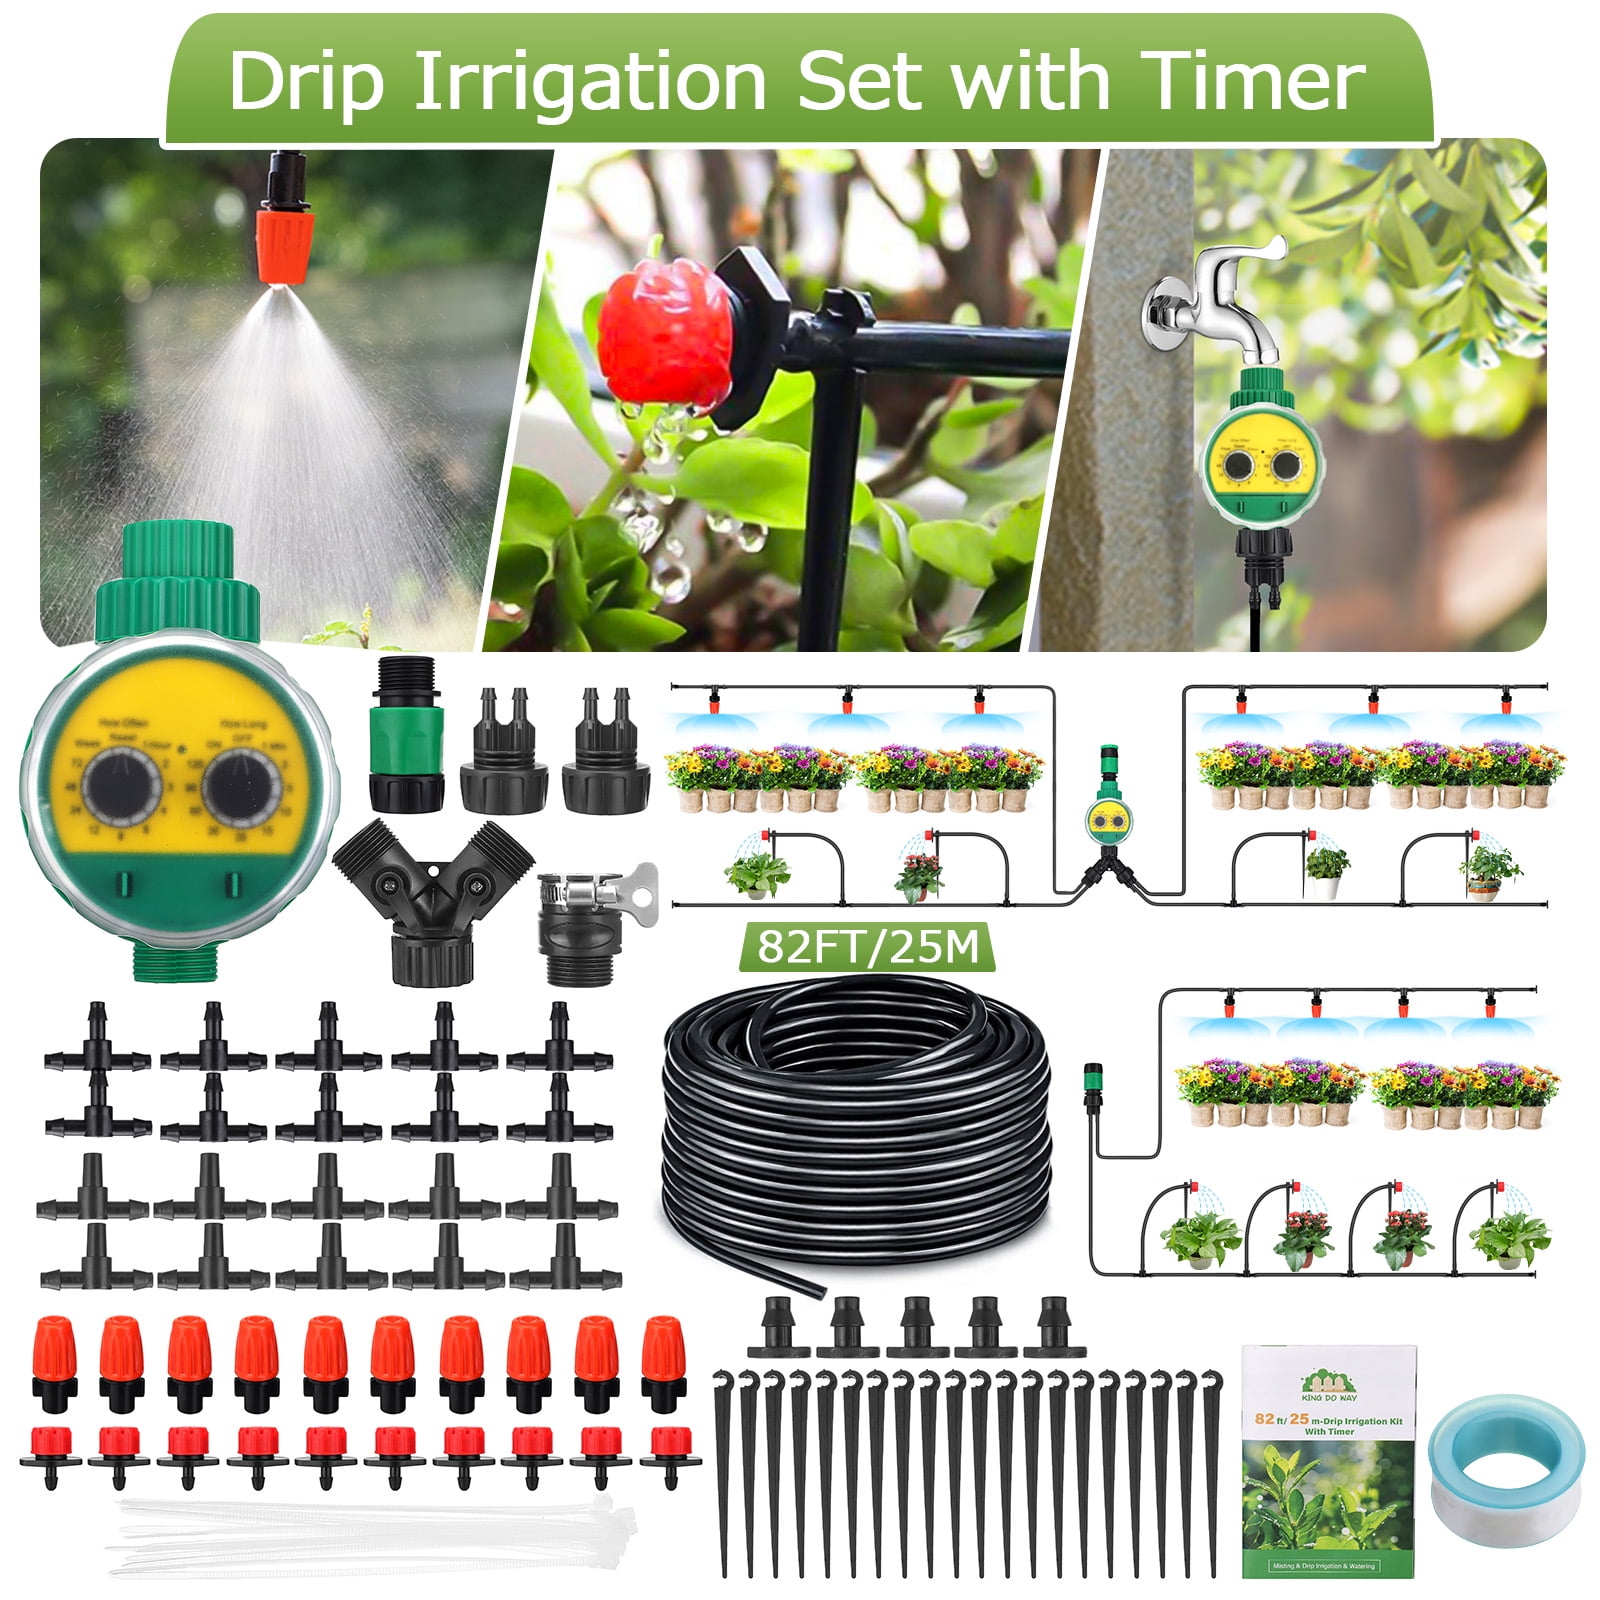 Micro Drip Irrigation System Plant Lawn Garden Watering Hose Spray Sprinkler Kit 